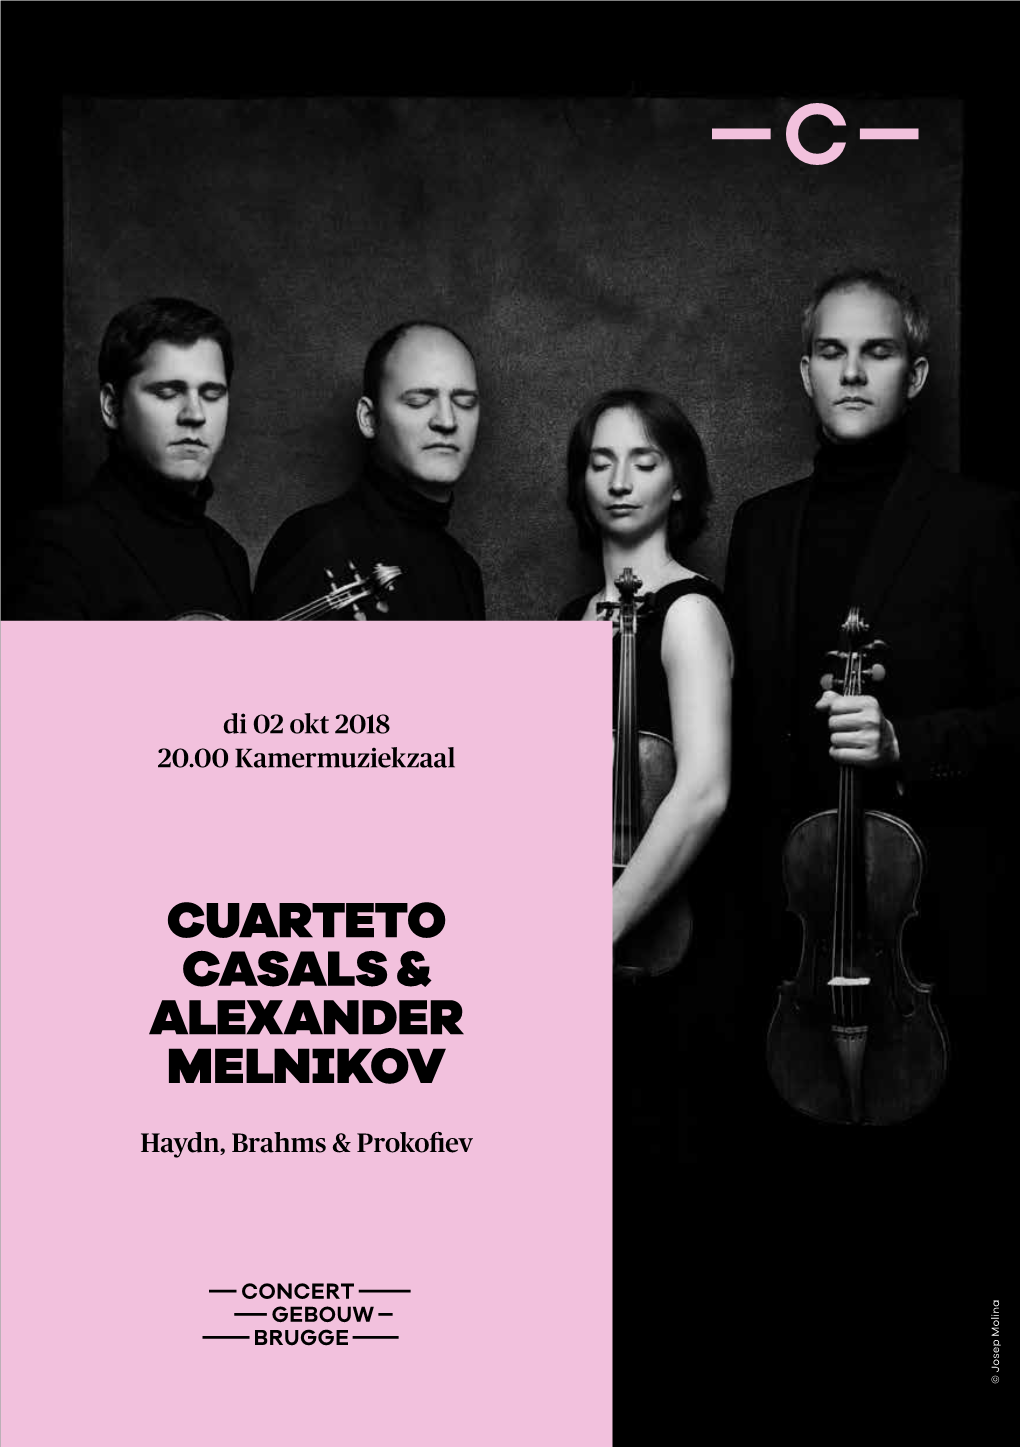 Cuarteto Casals & Alexander Melnikov